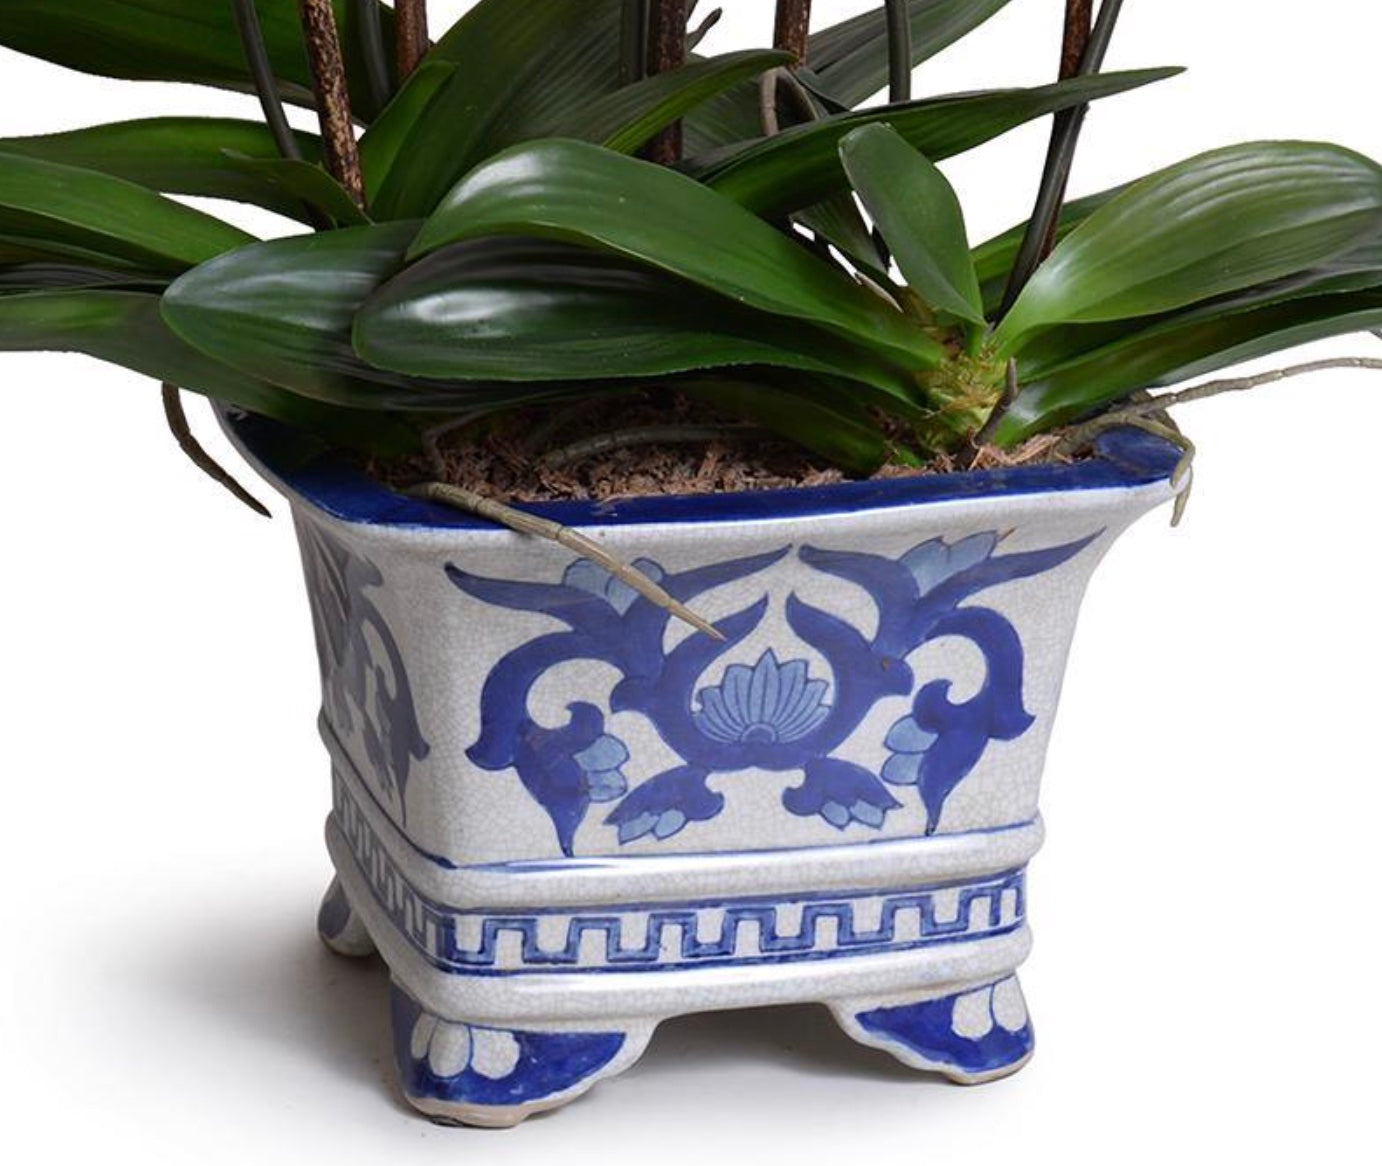 Orchid x5 in Ceramic Vase - White